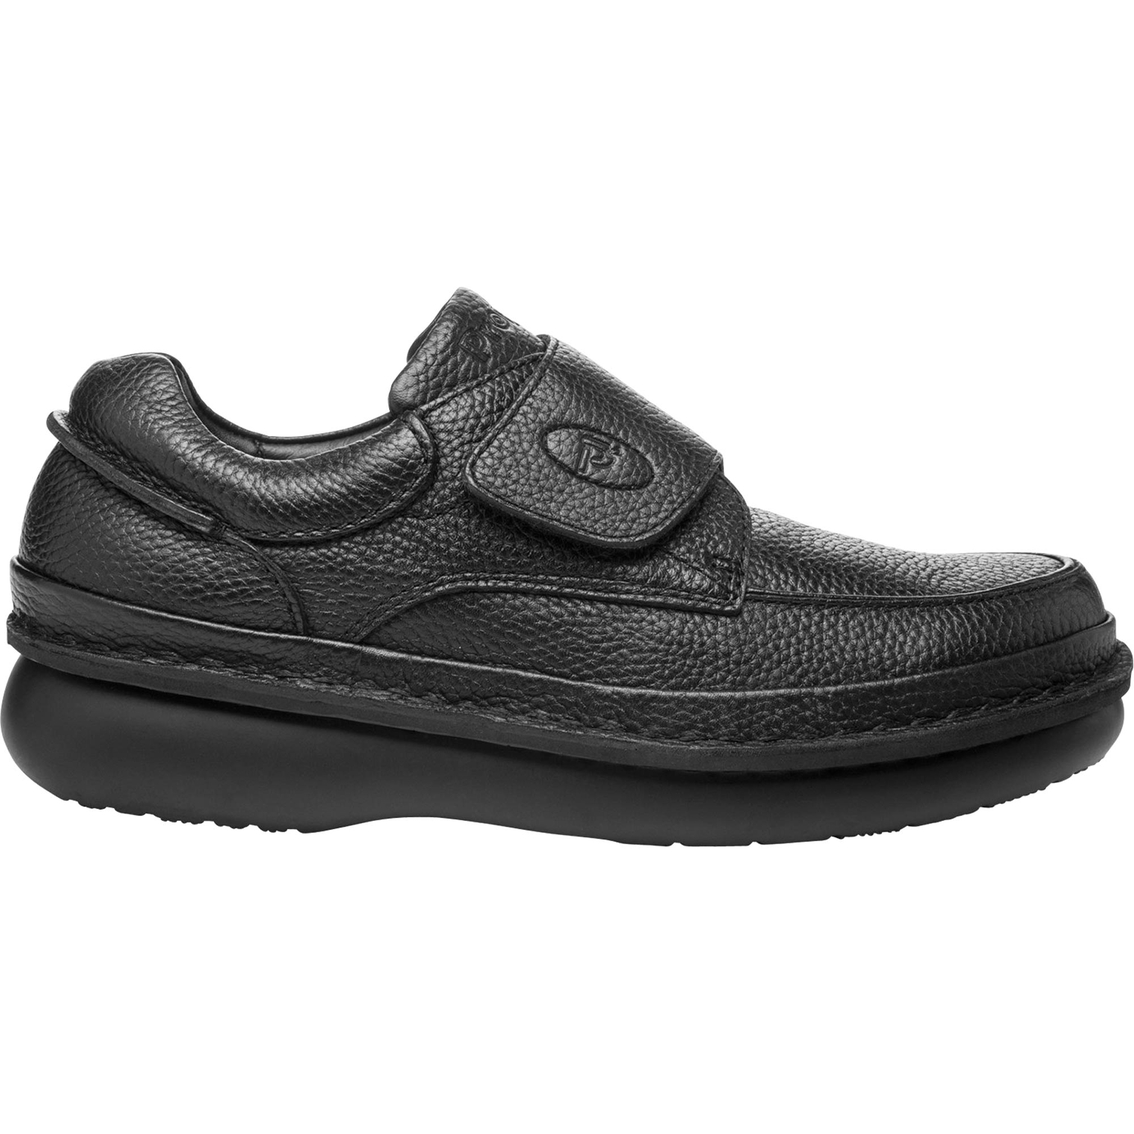 Propet Men's Scandia Velcro Walking Shoes - Image 2 of 4